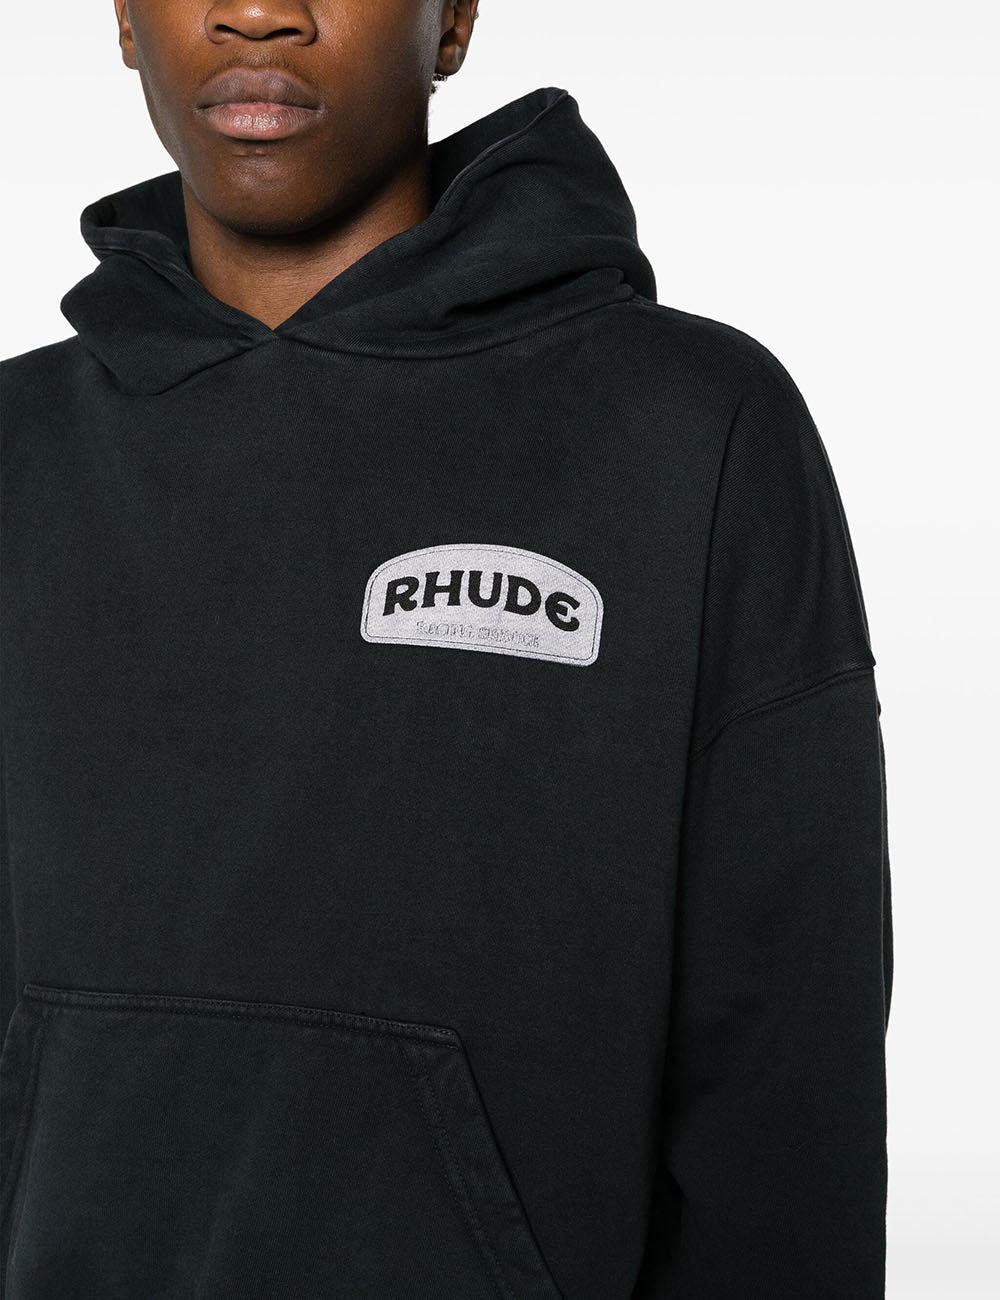 RHUDE RHUDE SUPERCROSS HOODIE